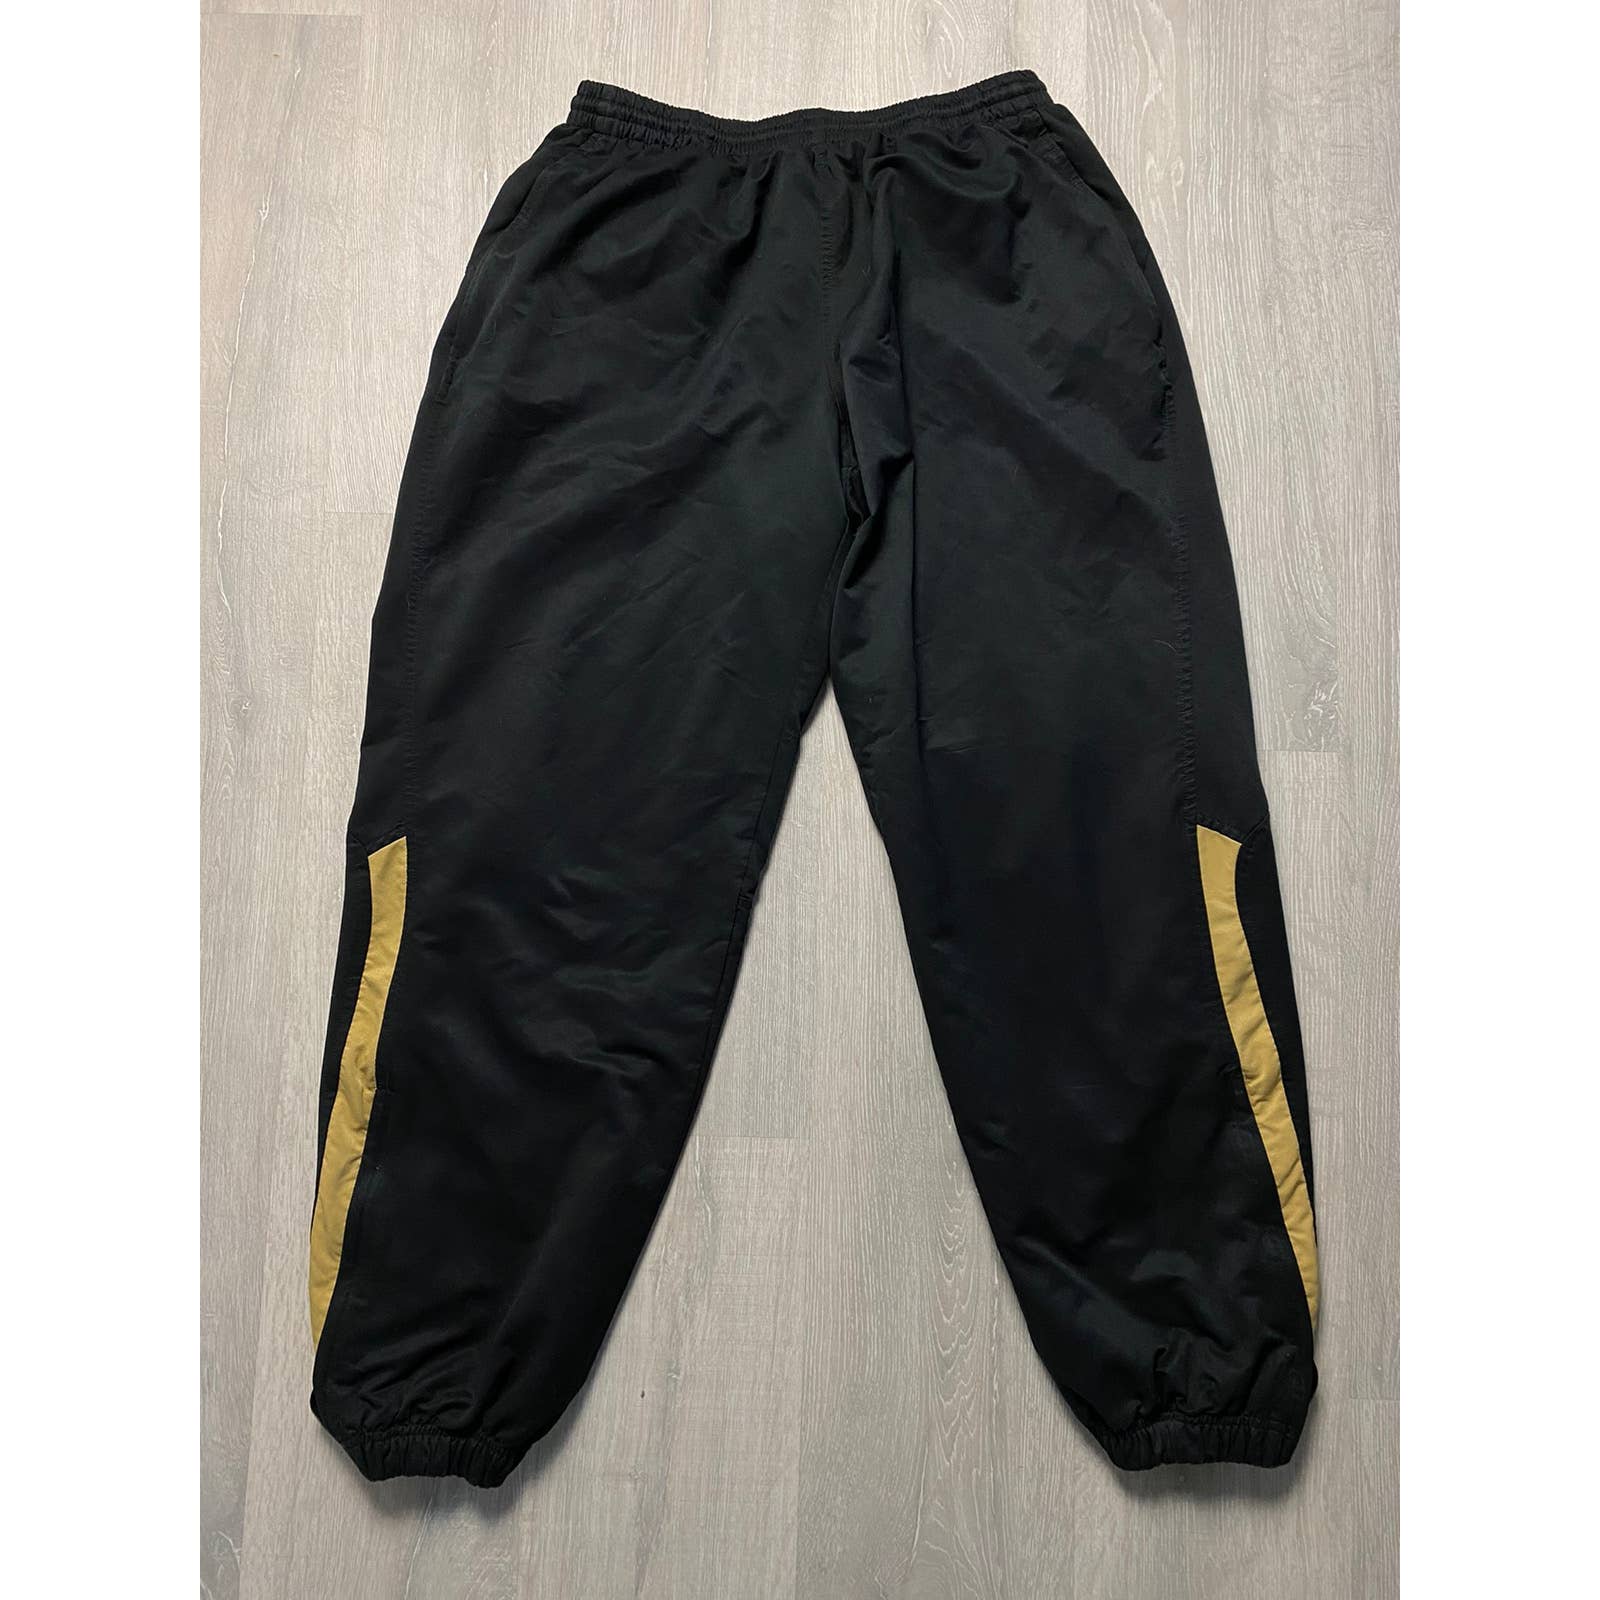 Nike vintage black track pants No logo 2000s gold – Refitted